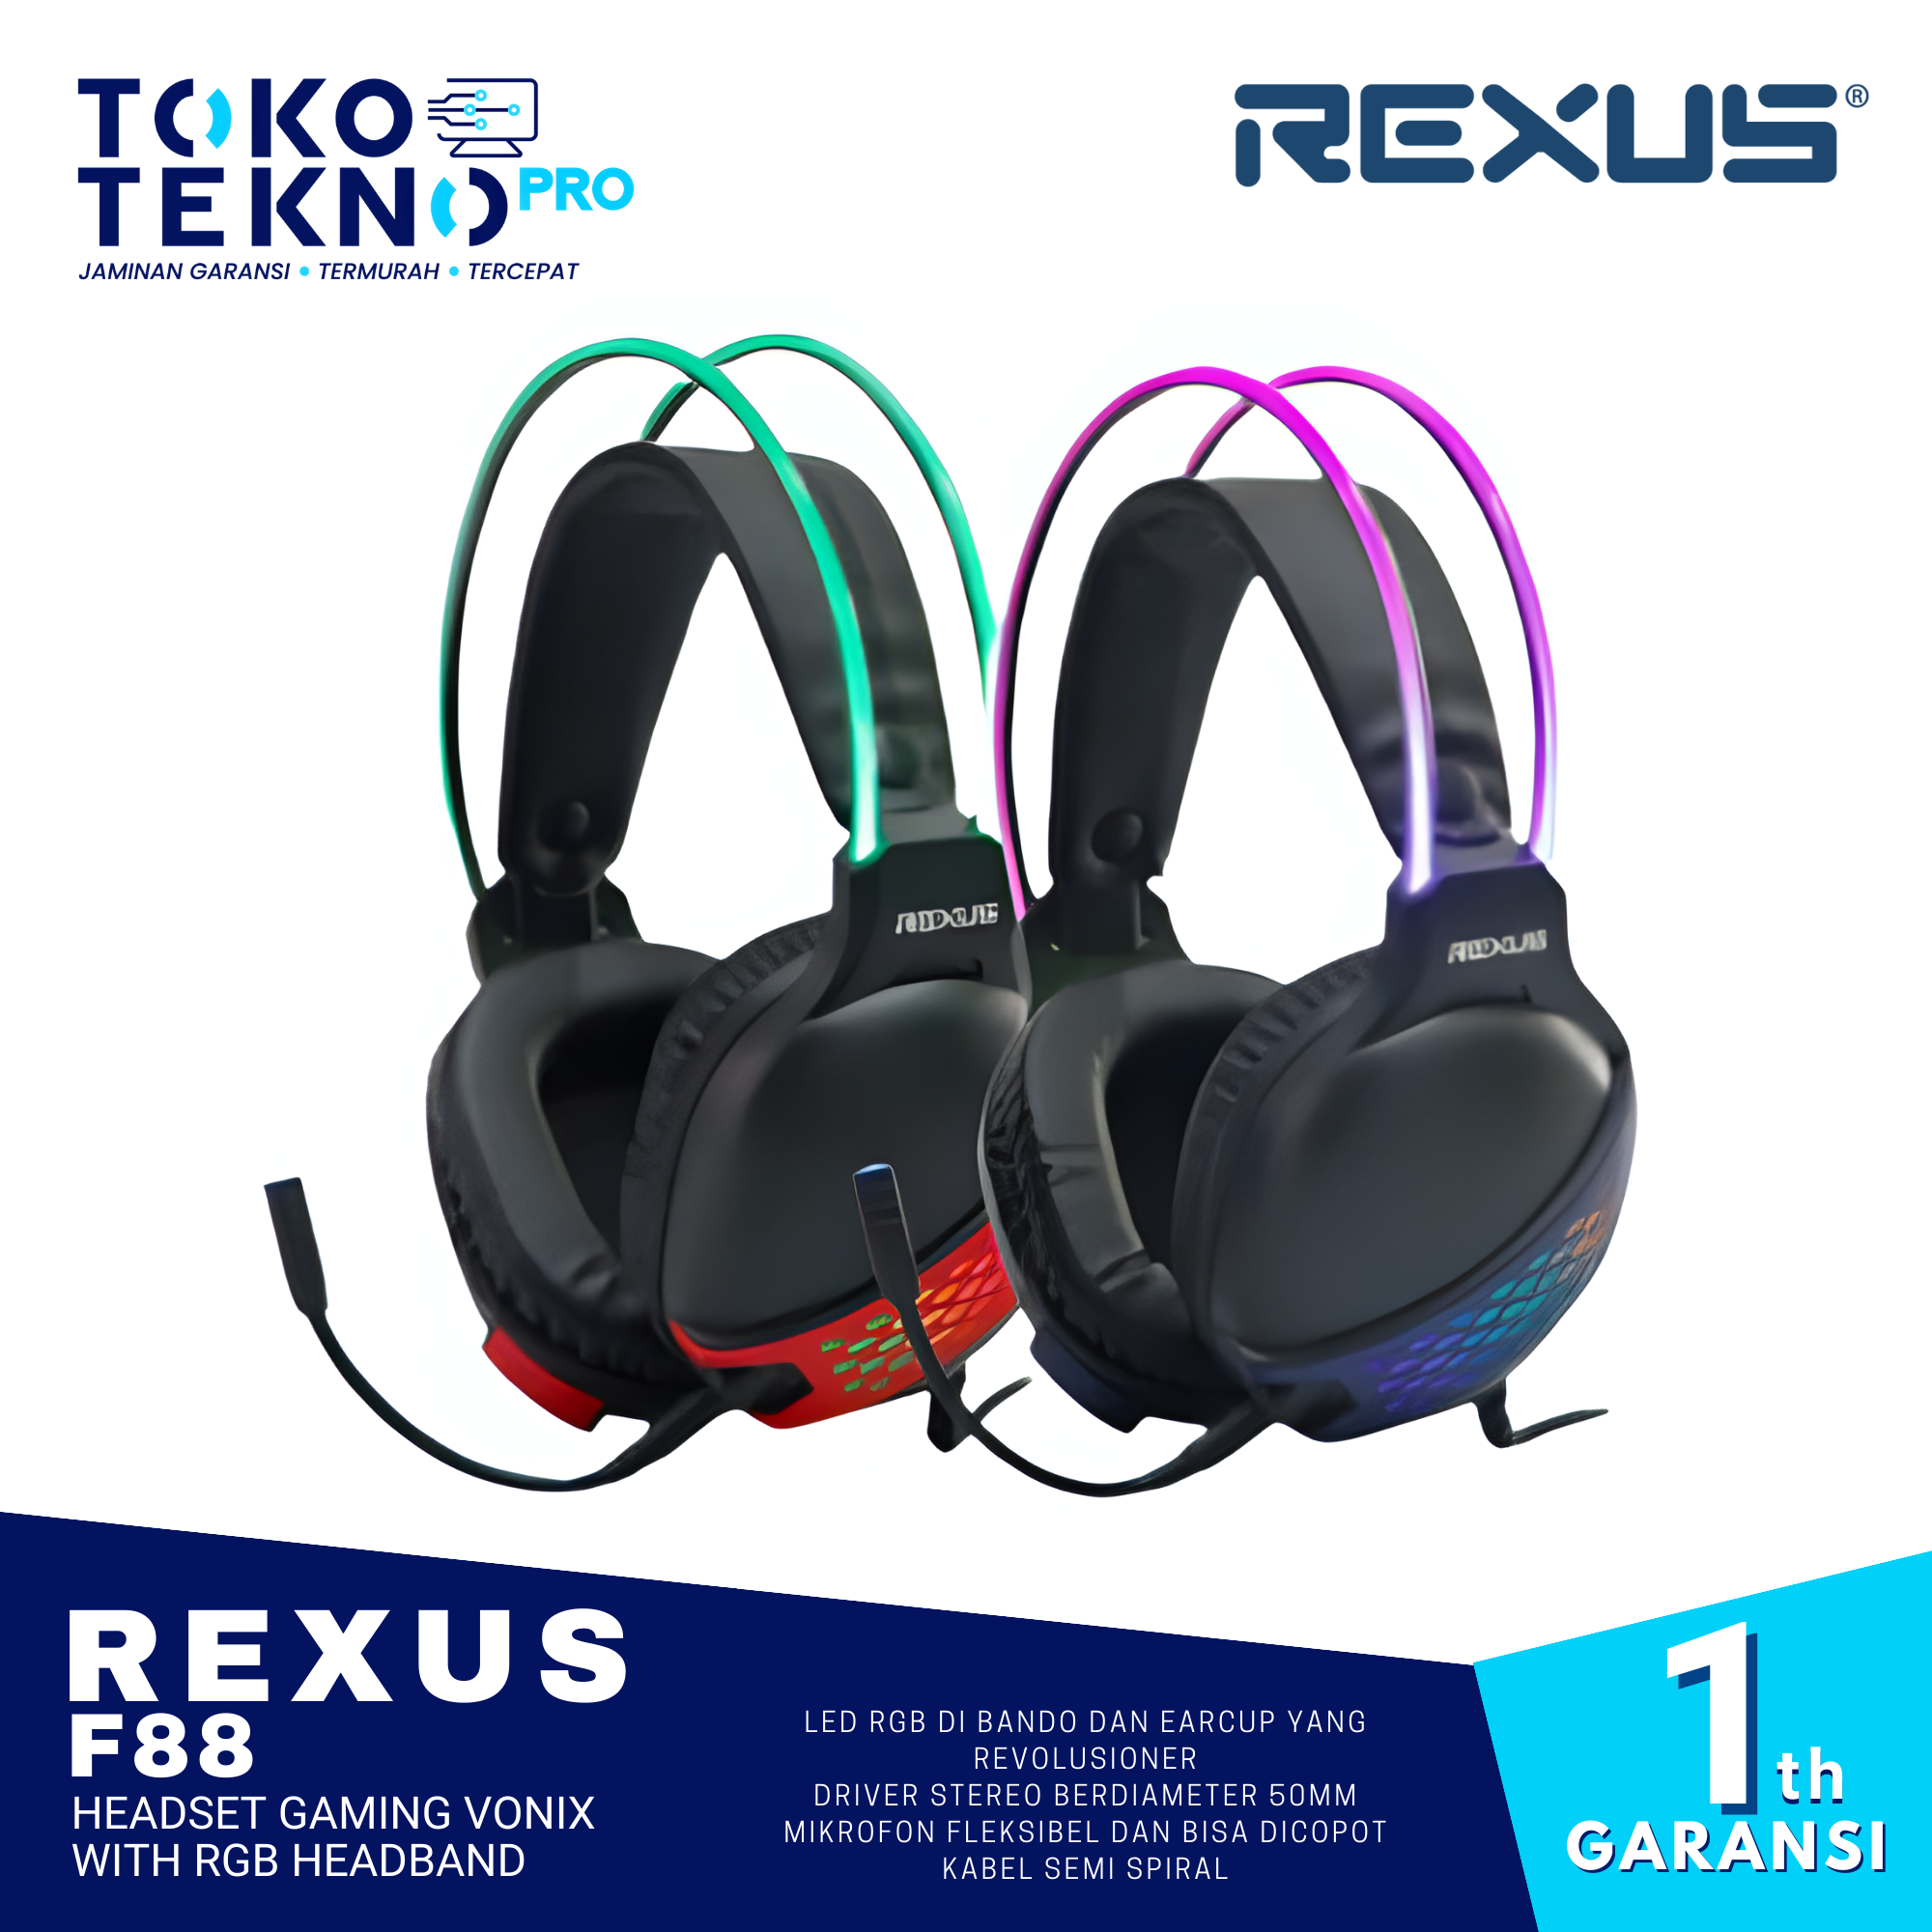 Rexus F88 Headset Gaming Vonix With RGB Headband